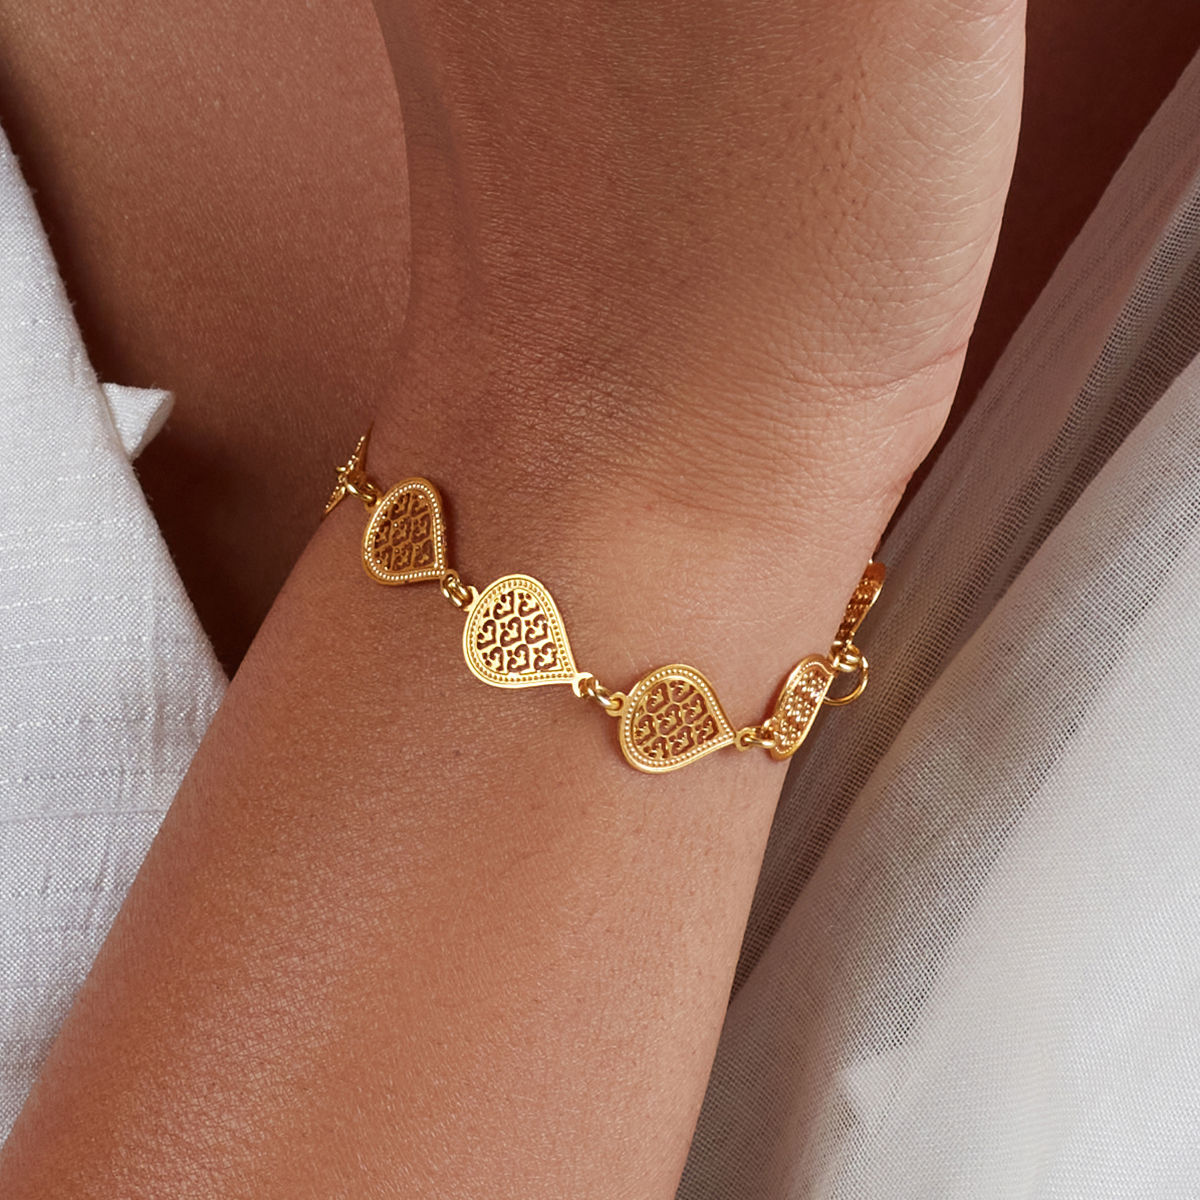 Share more than 89 elegant gold bracelet designs